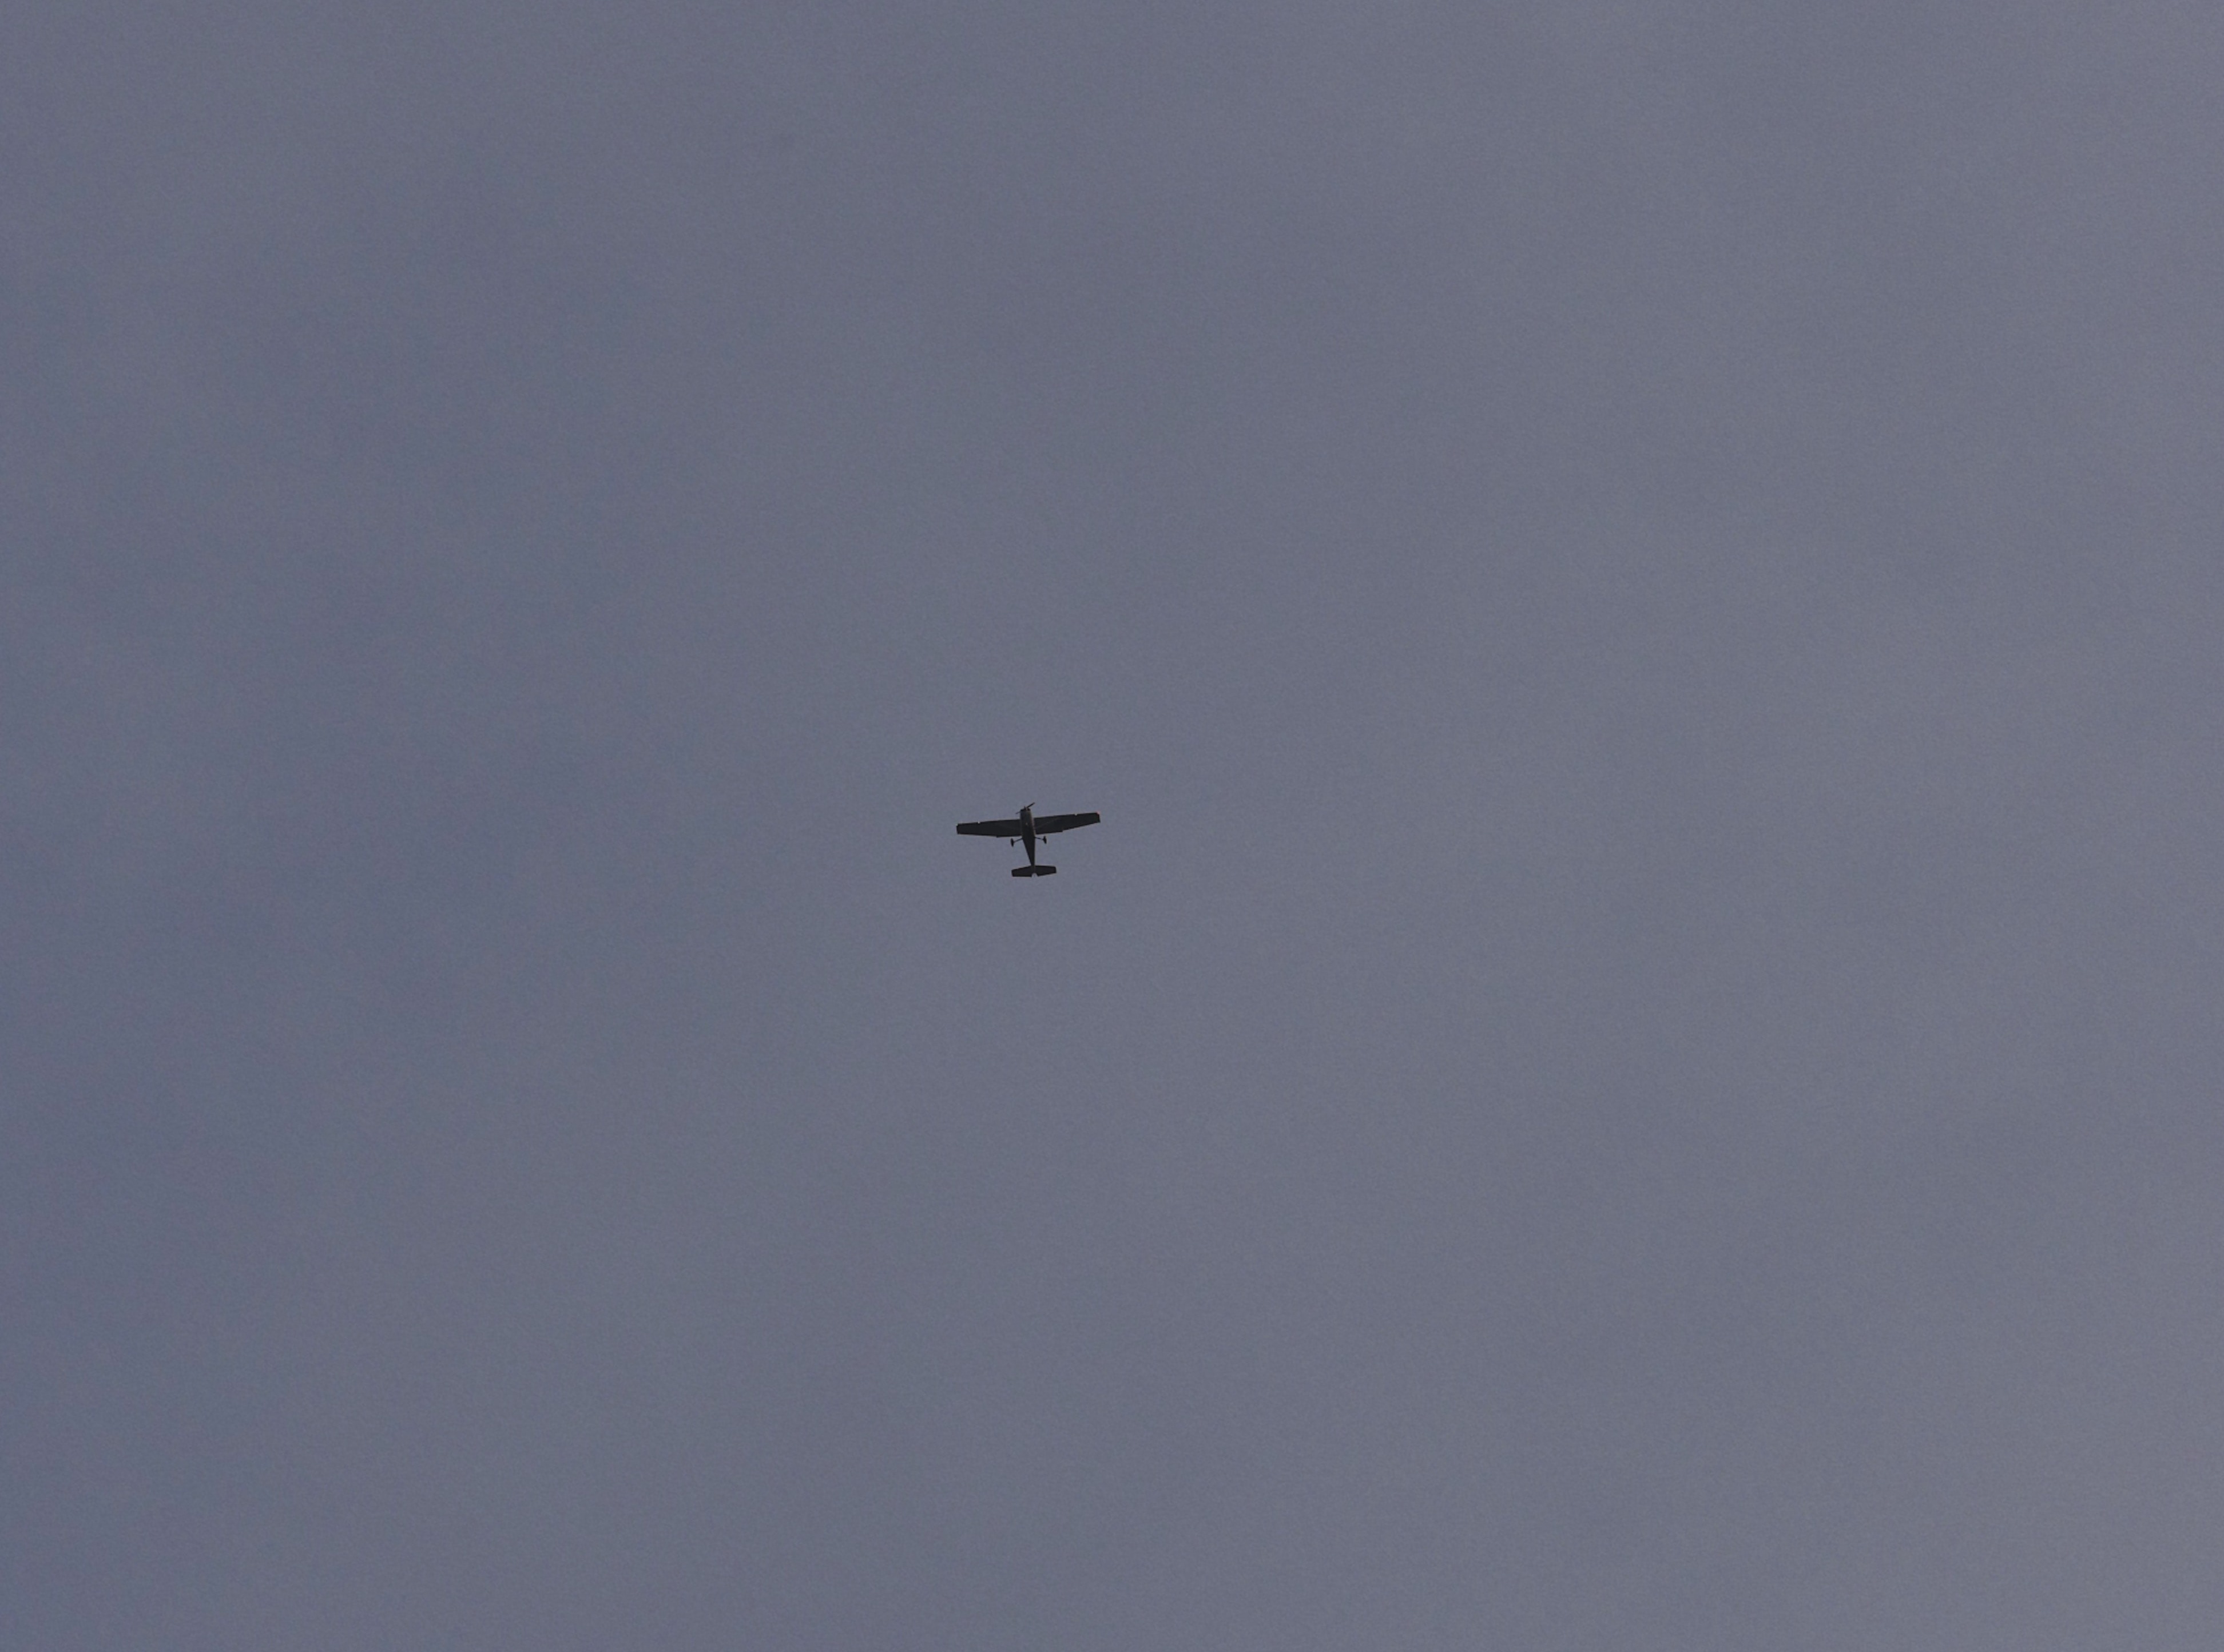 Airplane flying across a grey sky